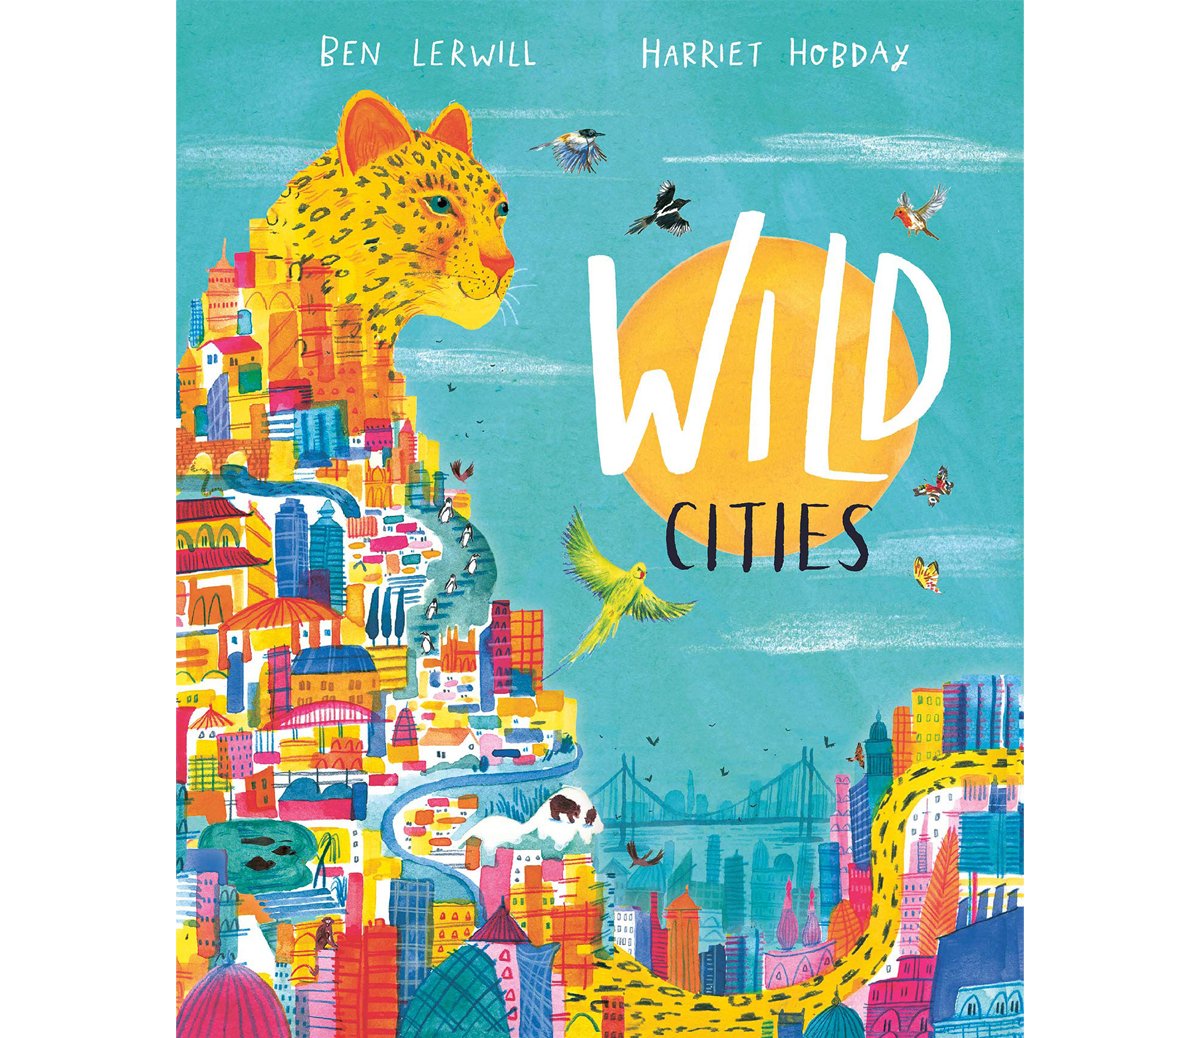 harriet-hobday-wild-cities-cover-illustration.jpg